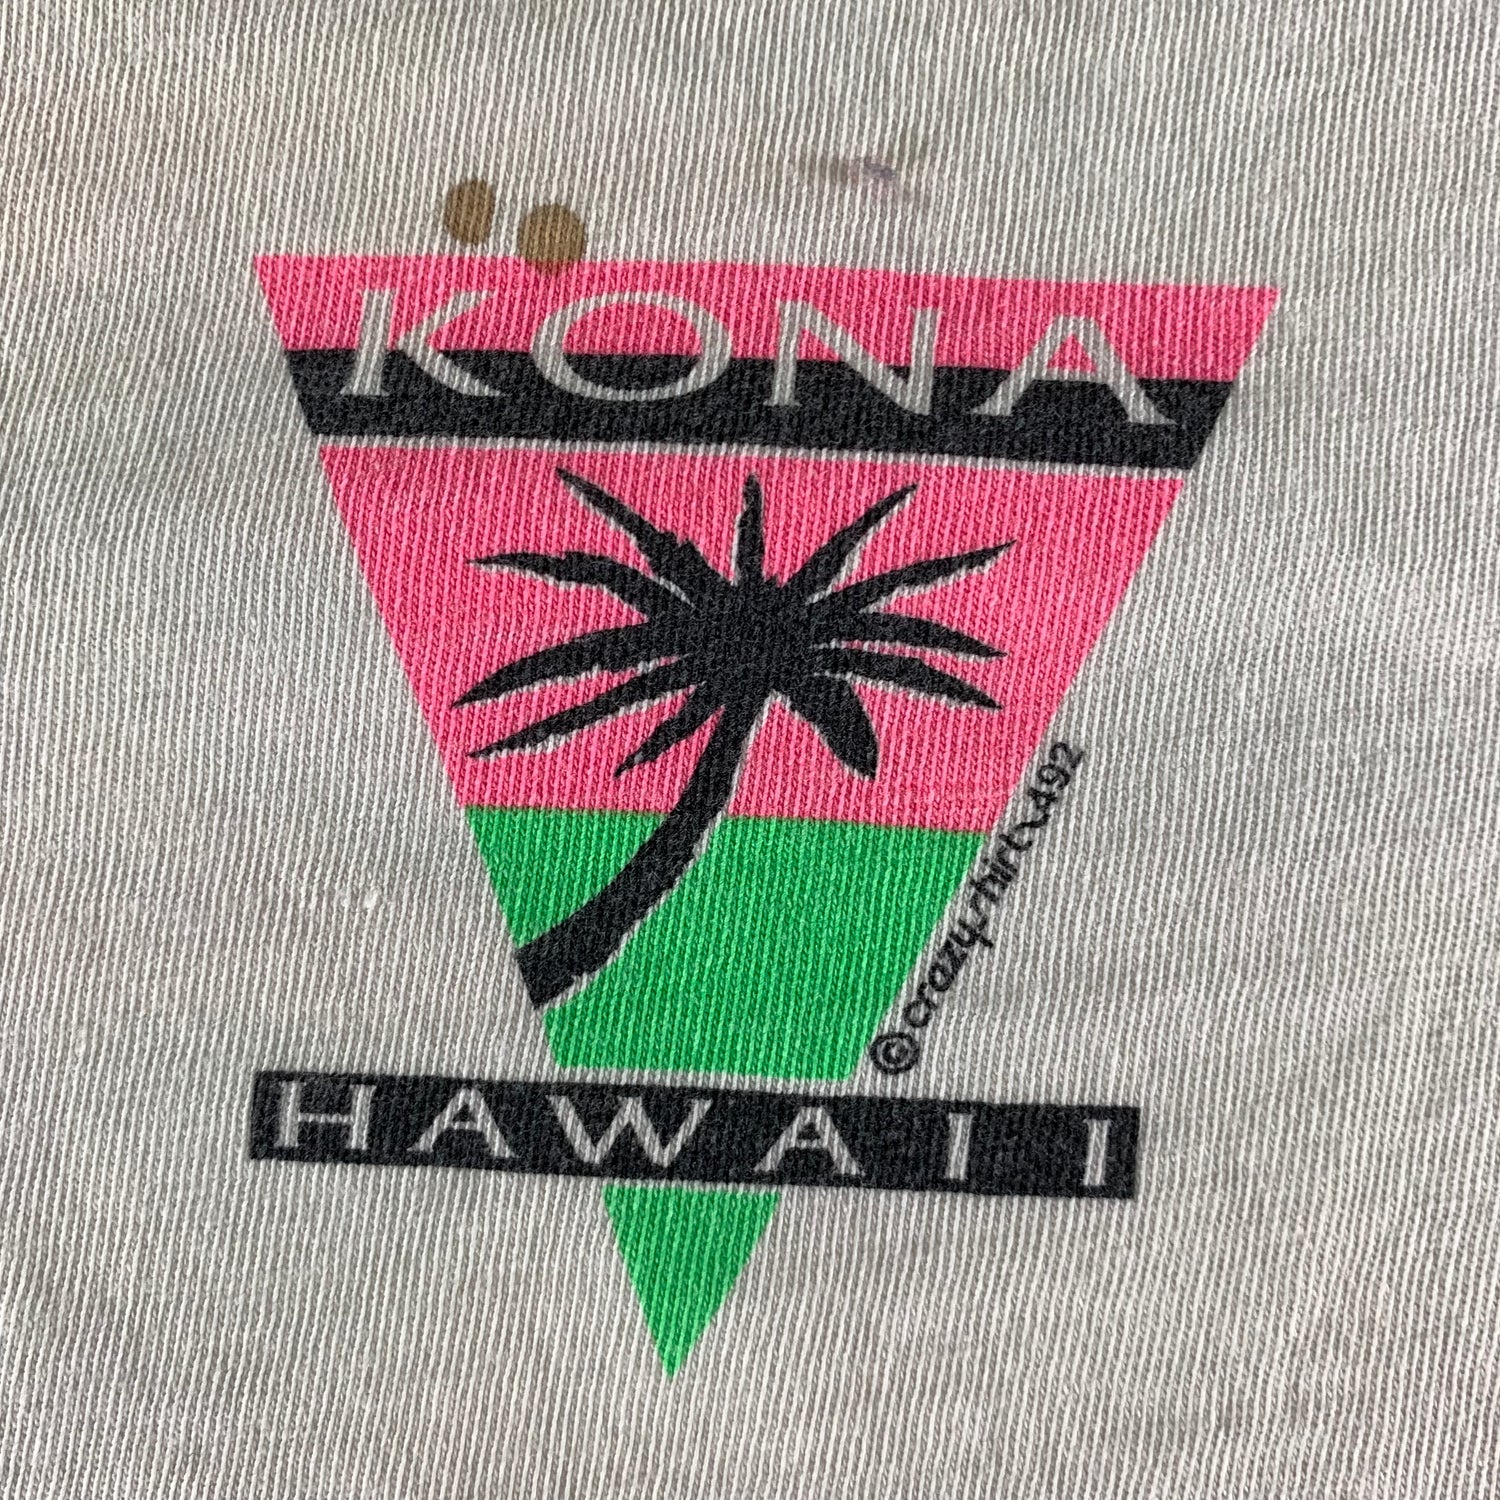 Vintage 1990s Kona Hawaii T-shirt size Large